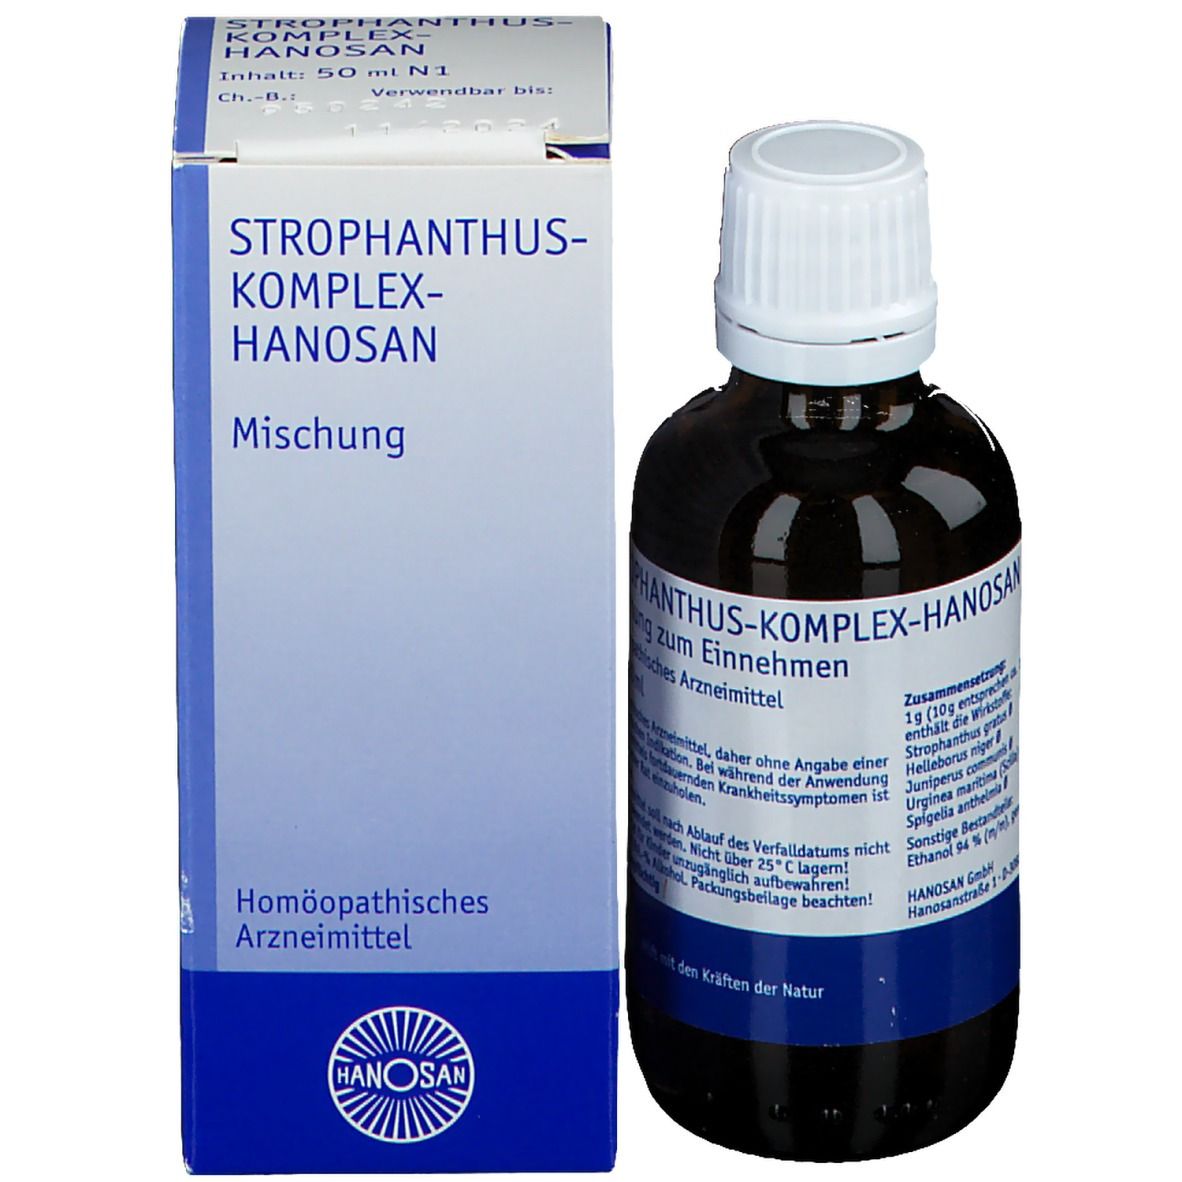 Strophanthus-Komplex-Hanosan